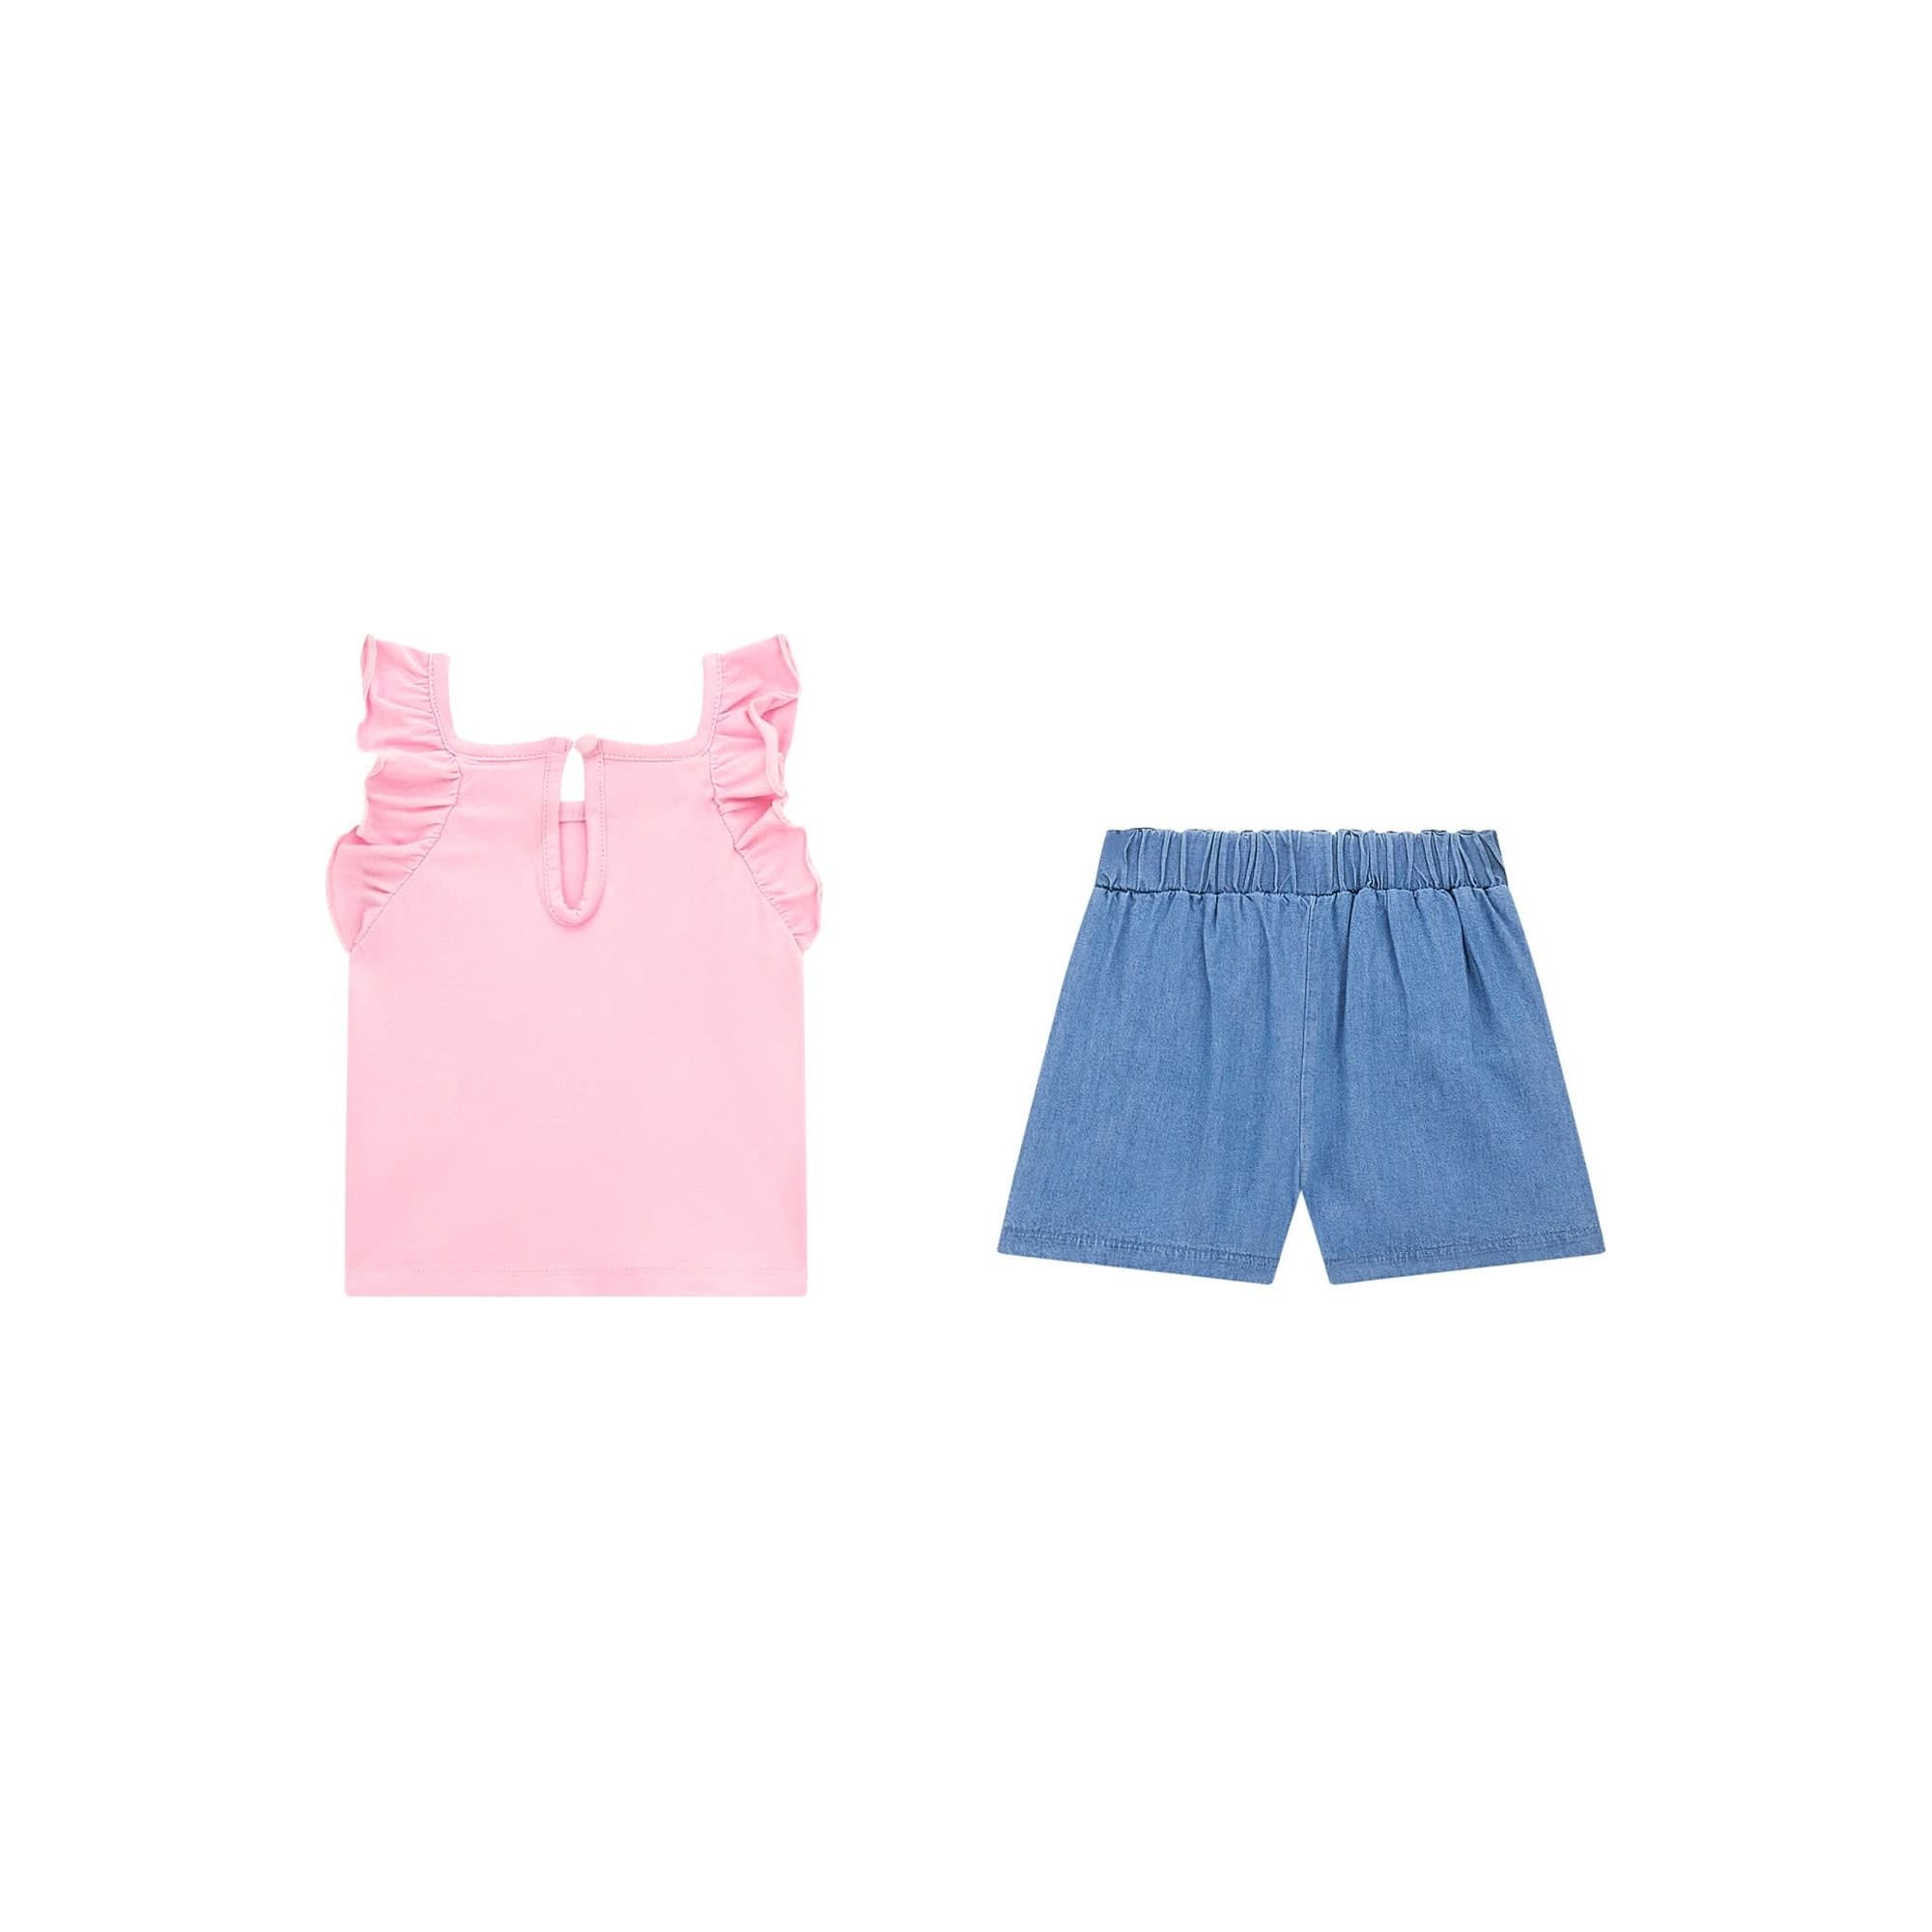 Guess - Infant Girls 2 Piece Short Set in Pink & Denim